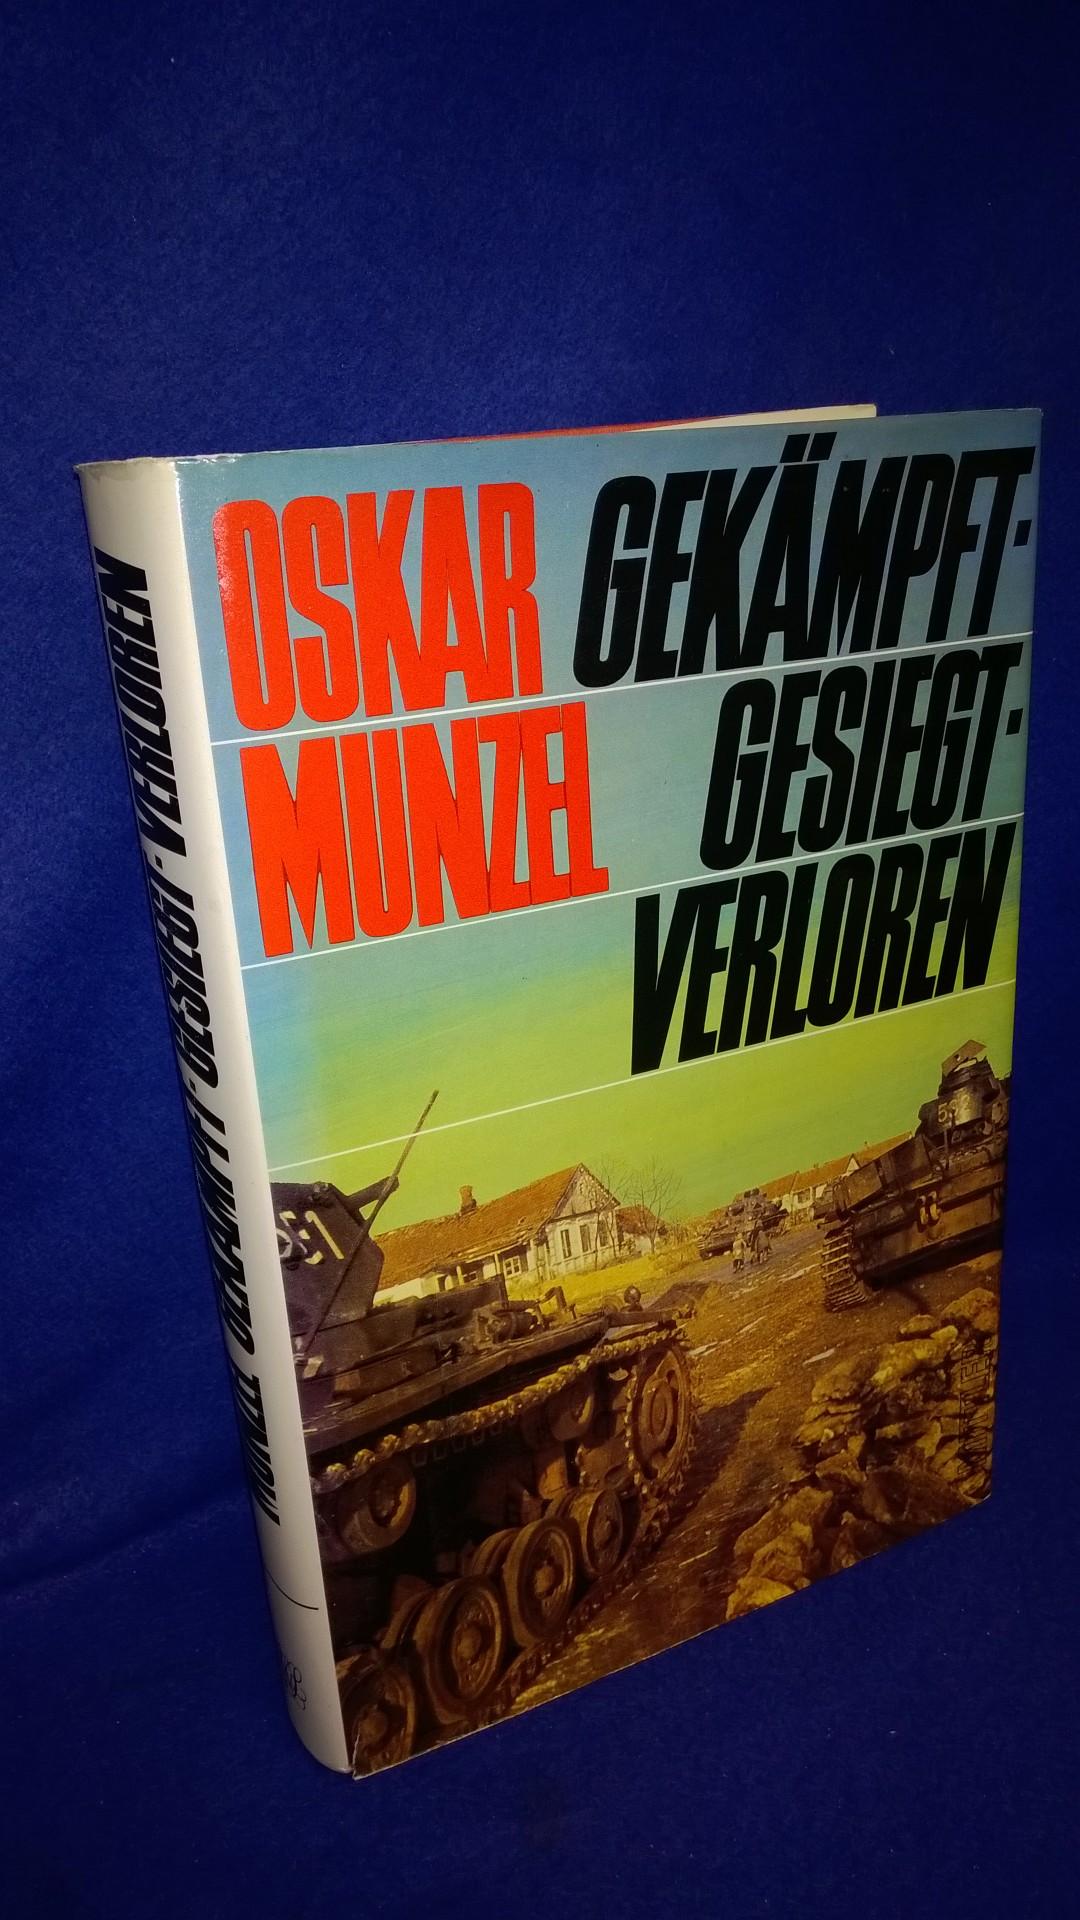 Gekämpft, gesiegt, verloren. Geschichte des Panzerregiments 6, 1740-1980.